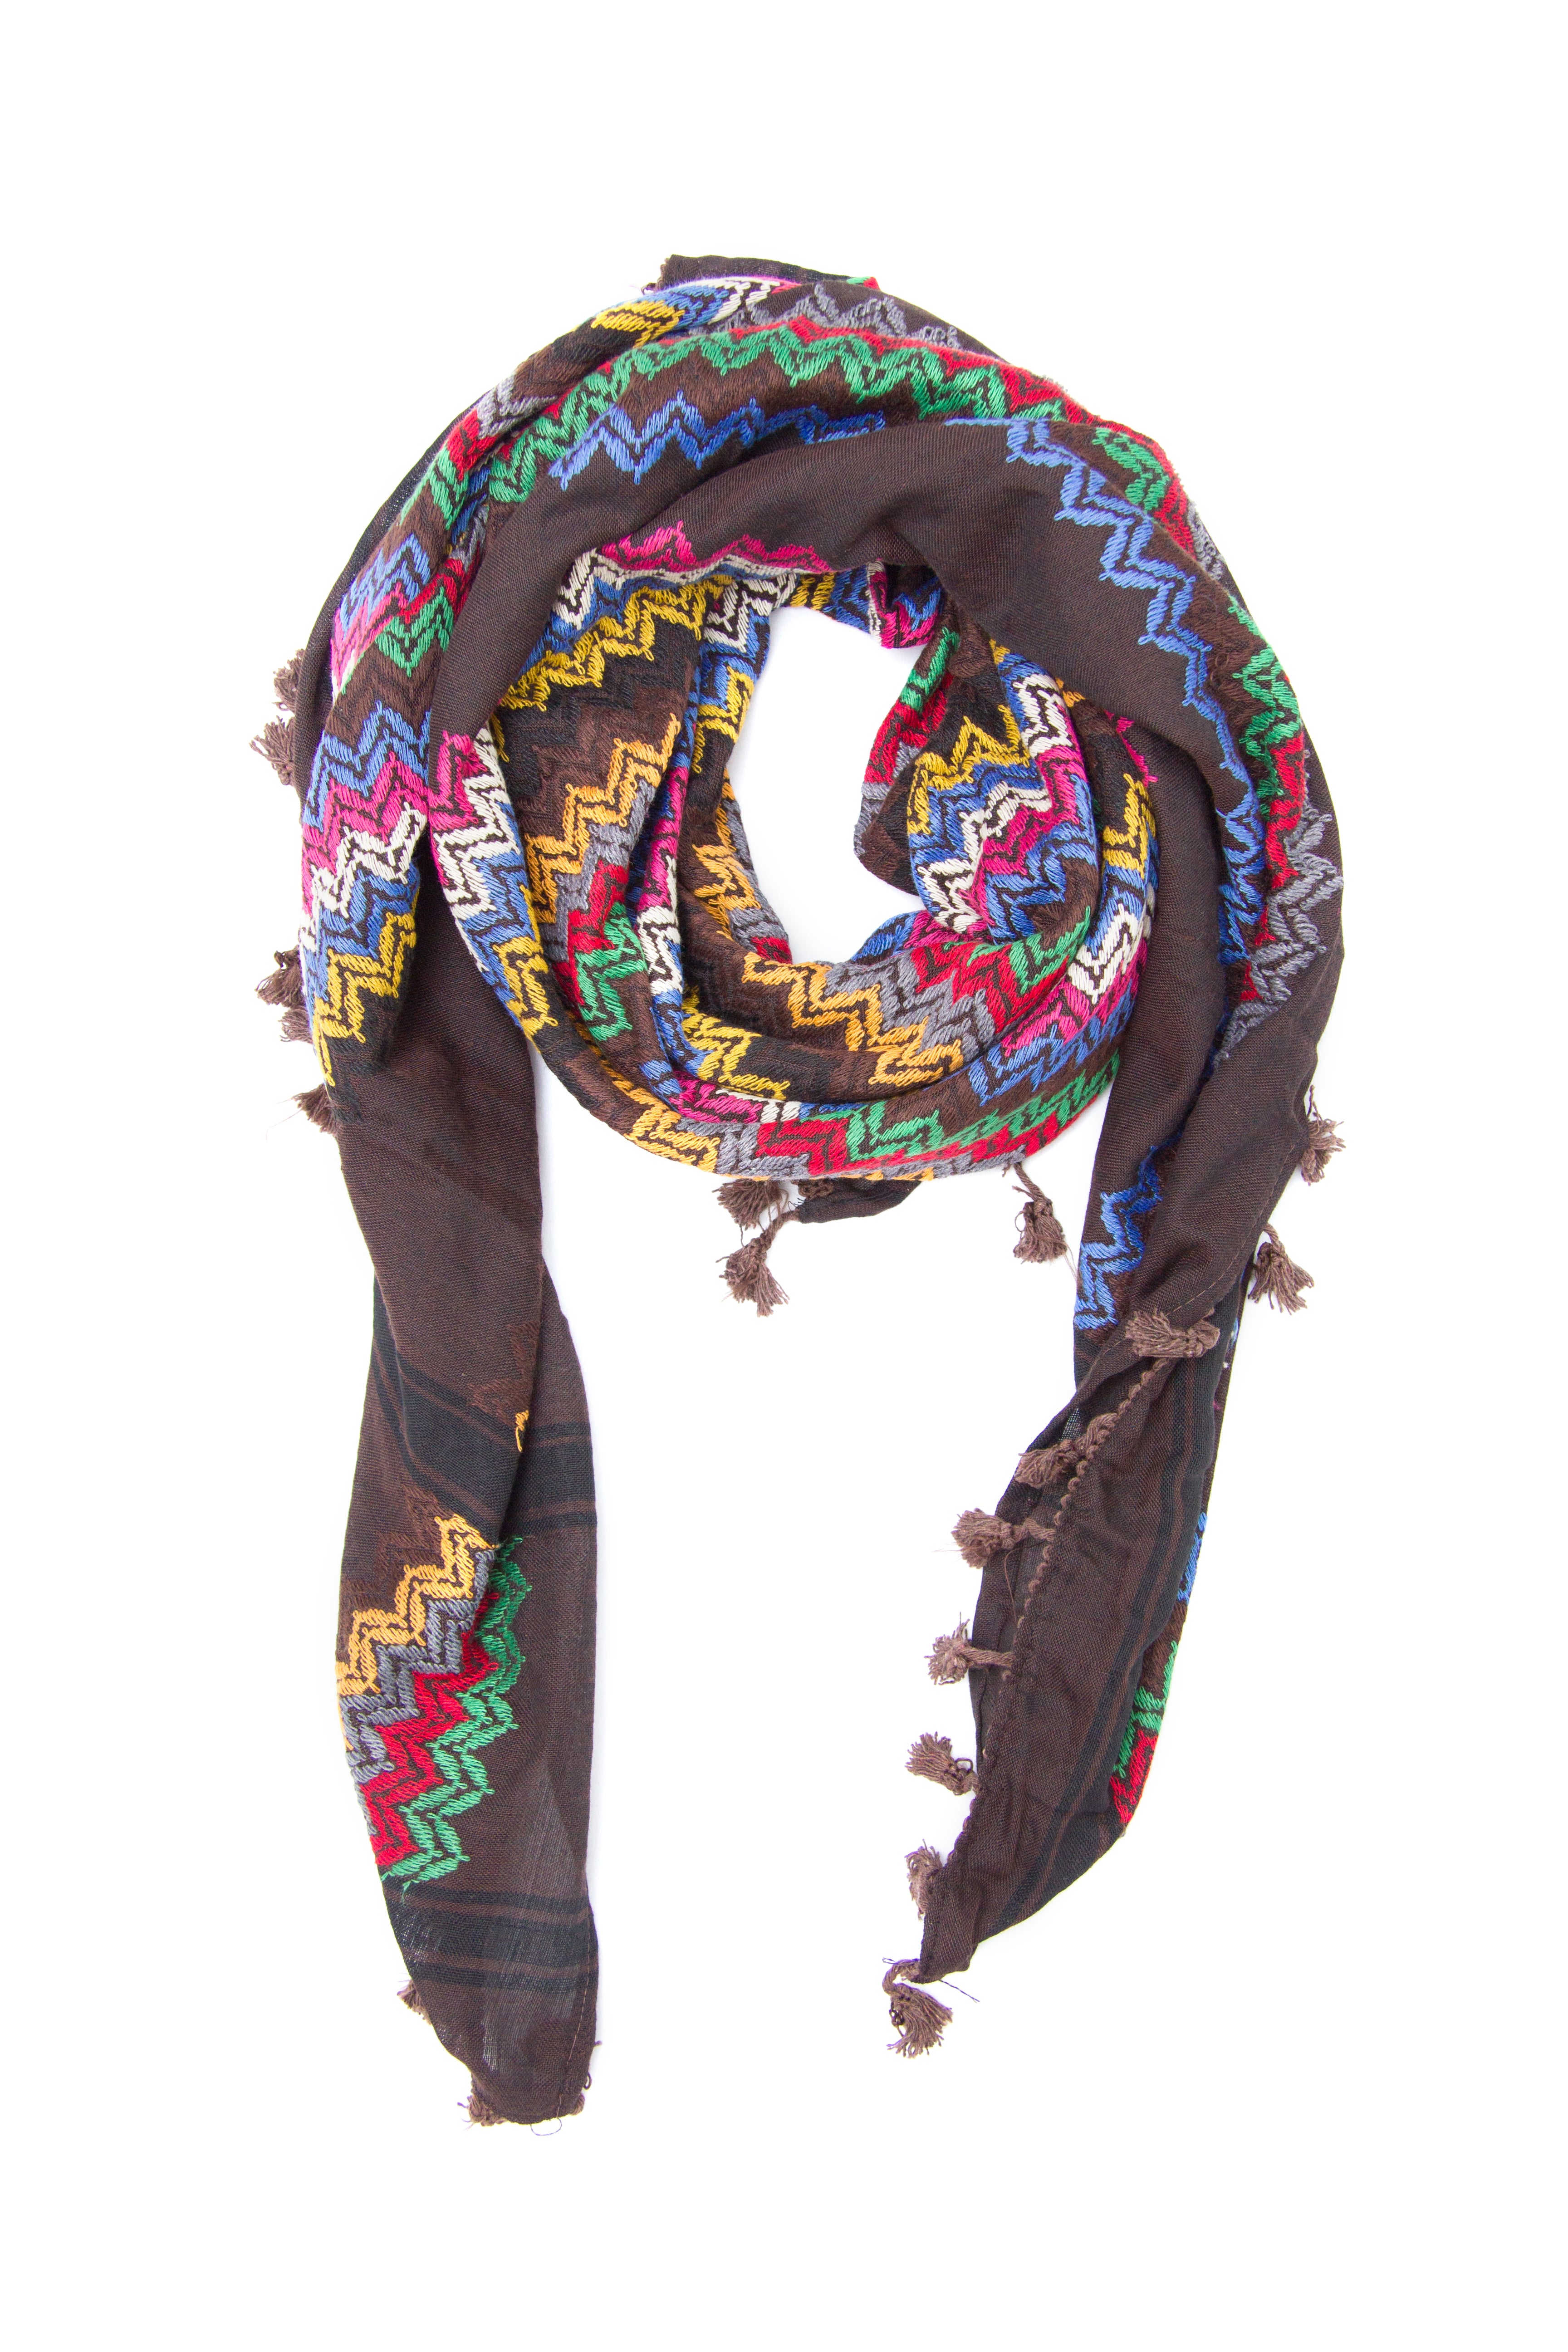 Hirbawi Brown chocolate shemagh fashion scarf